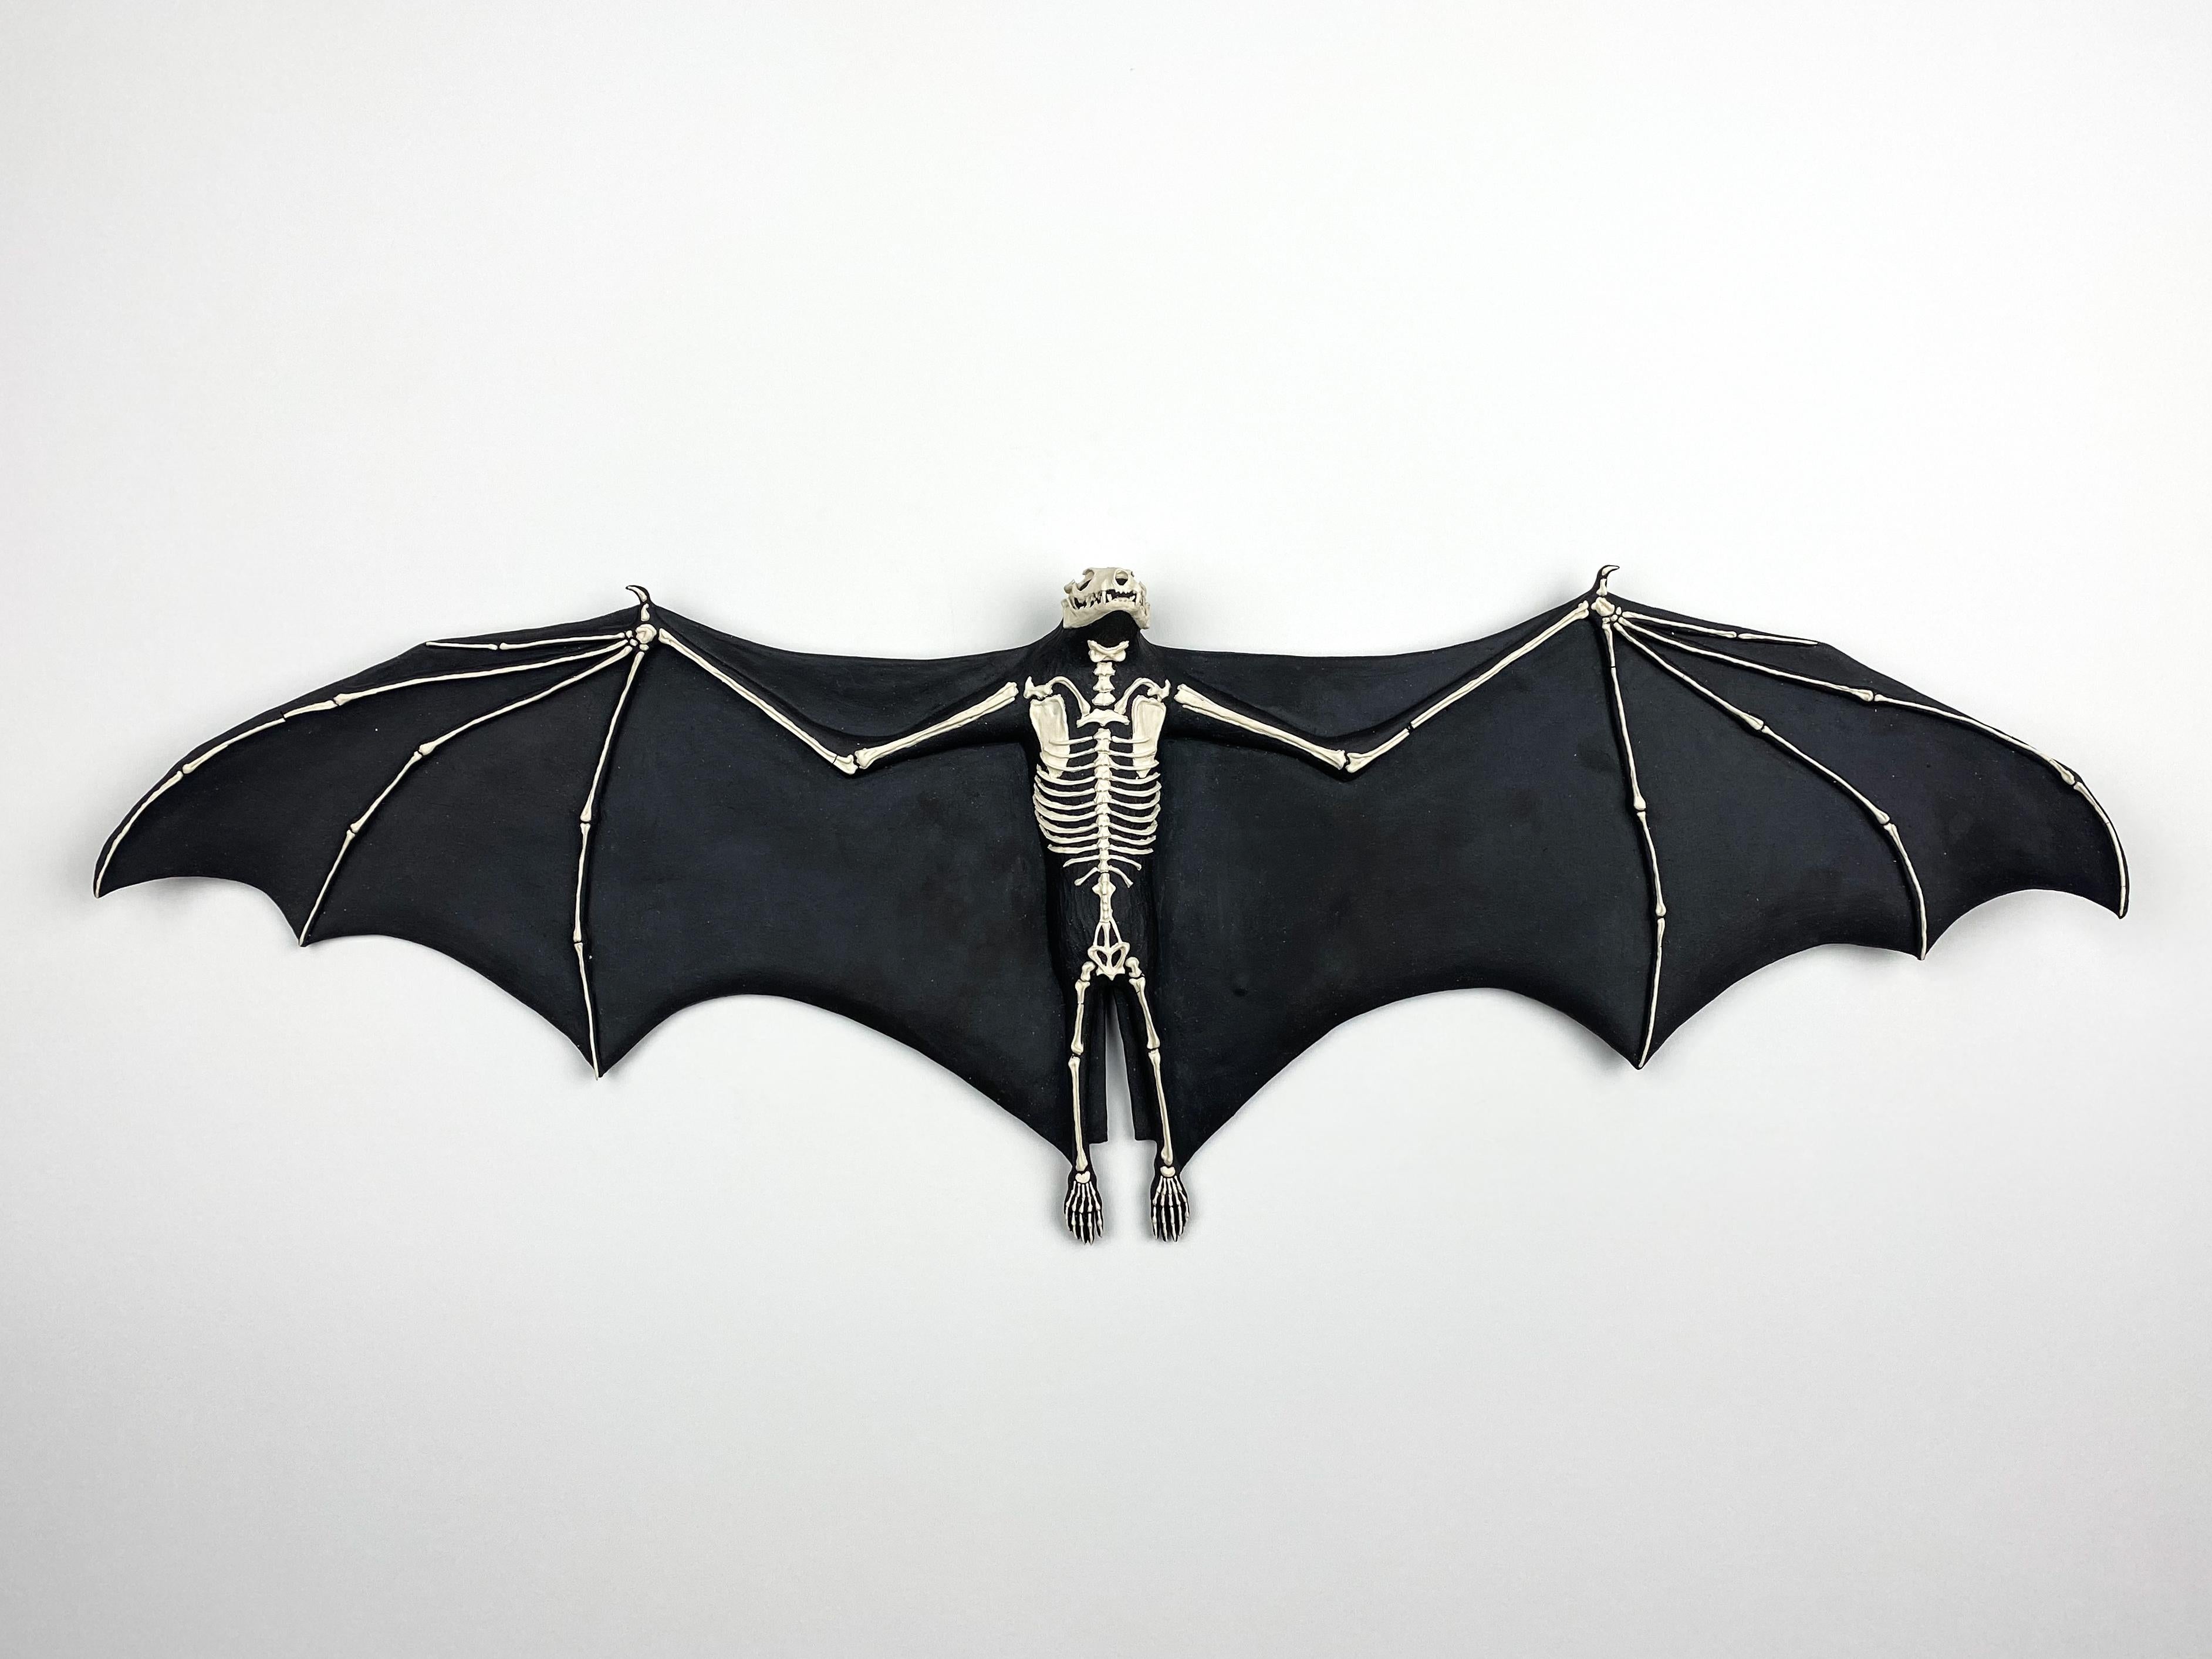 Fruit Bat - Sculpture by Grace Khalsa